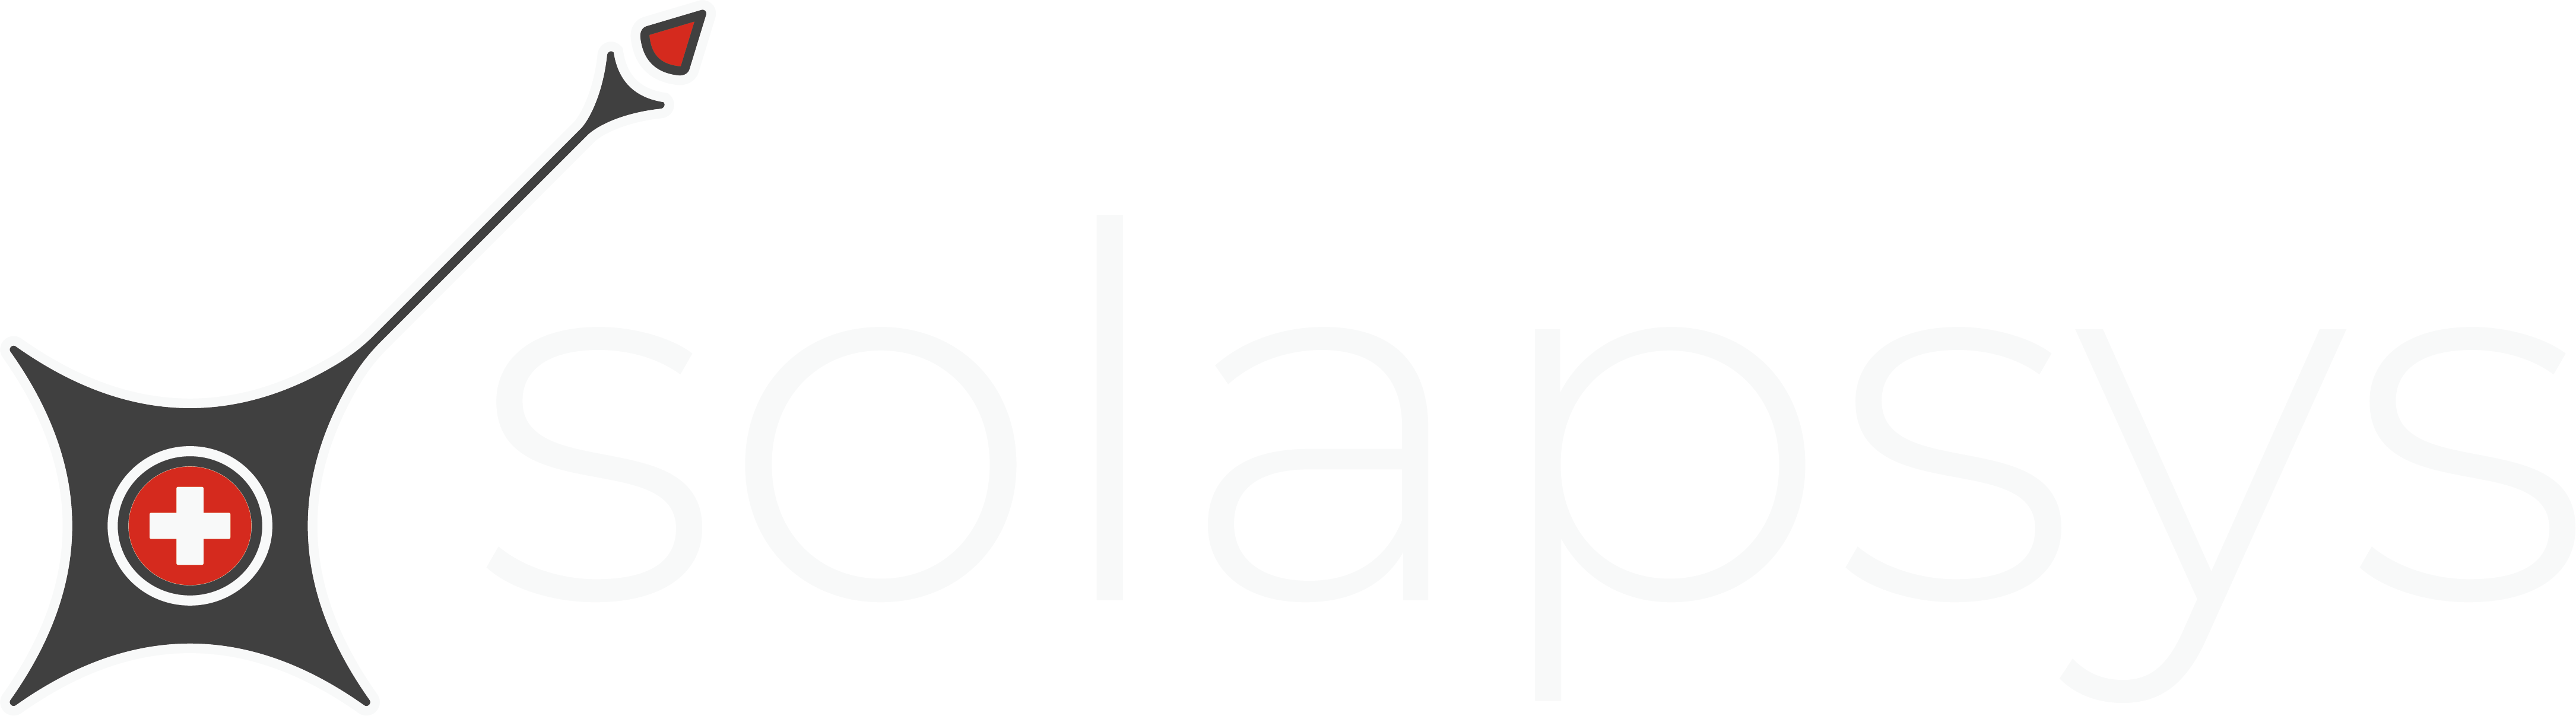 solapsys ag logo